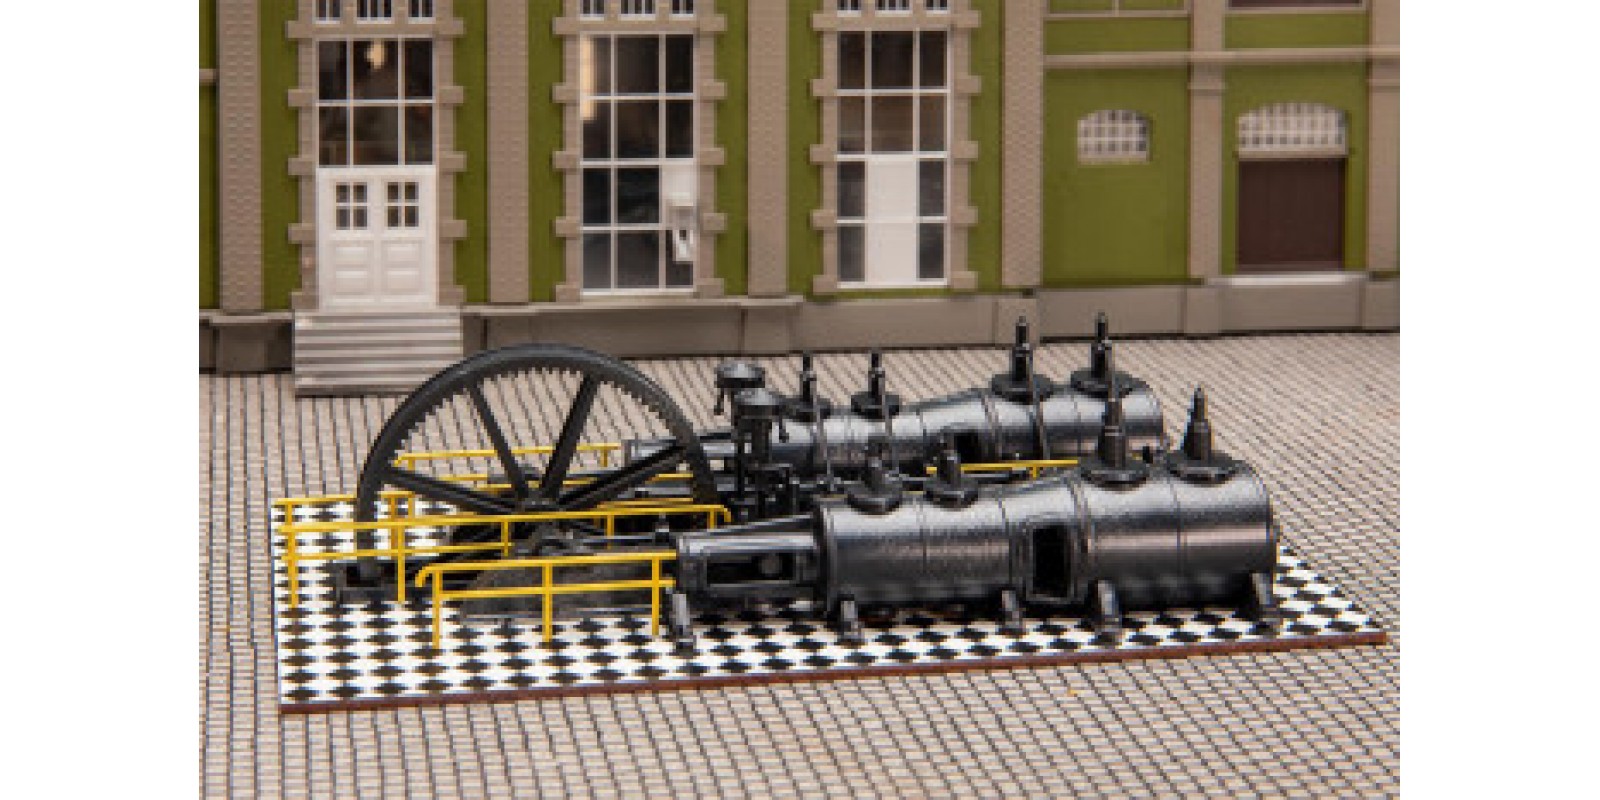 FA191788 Steam engine